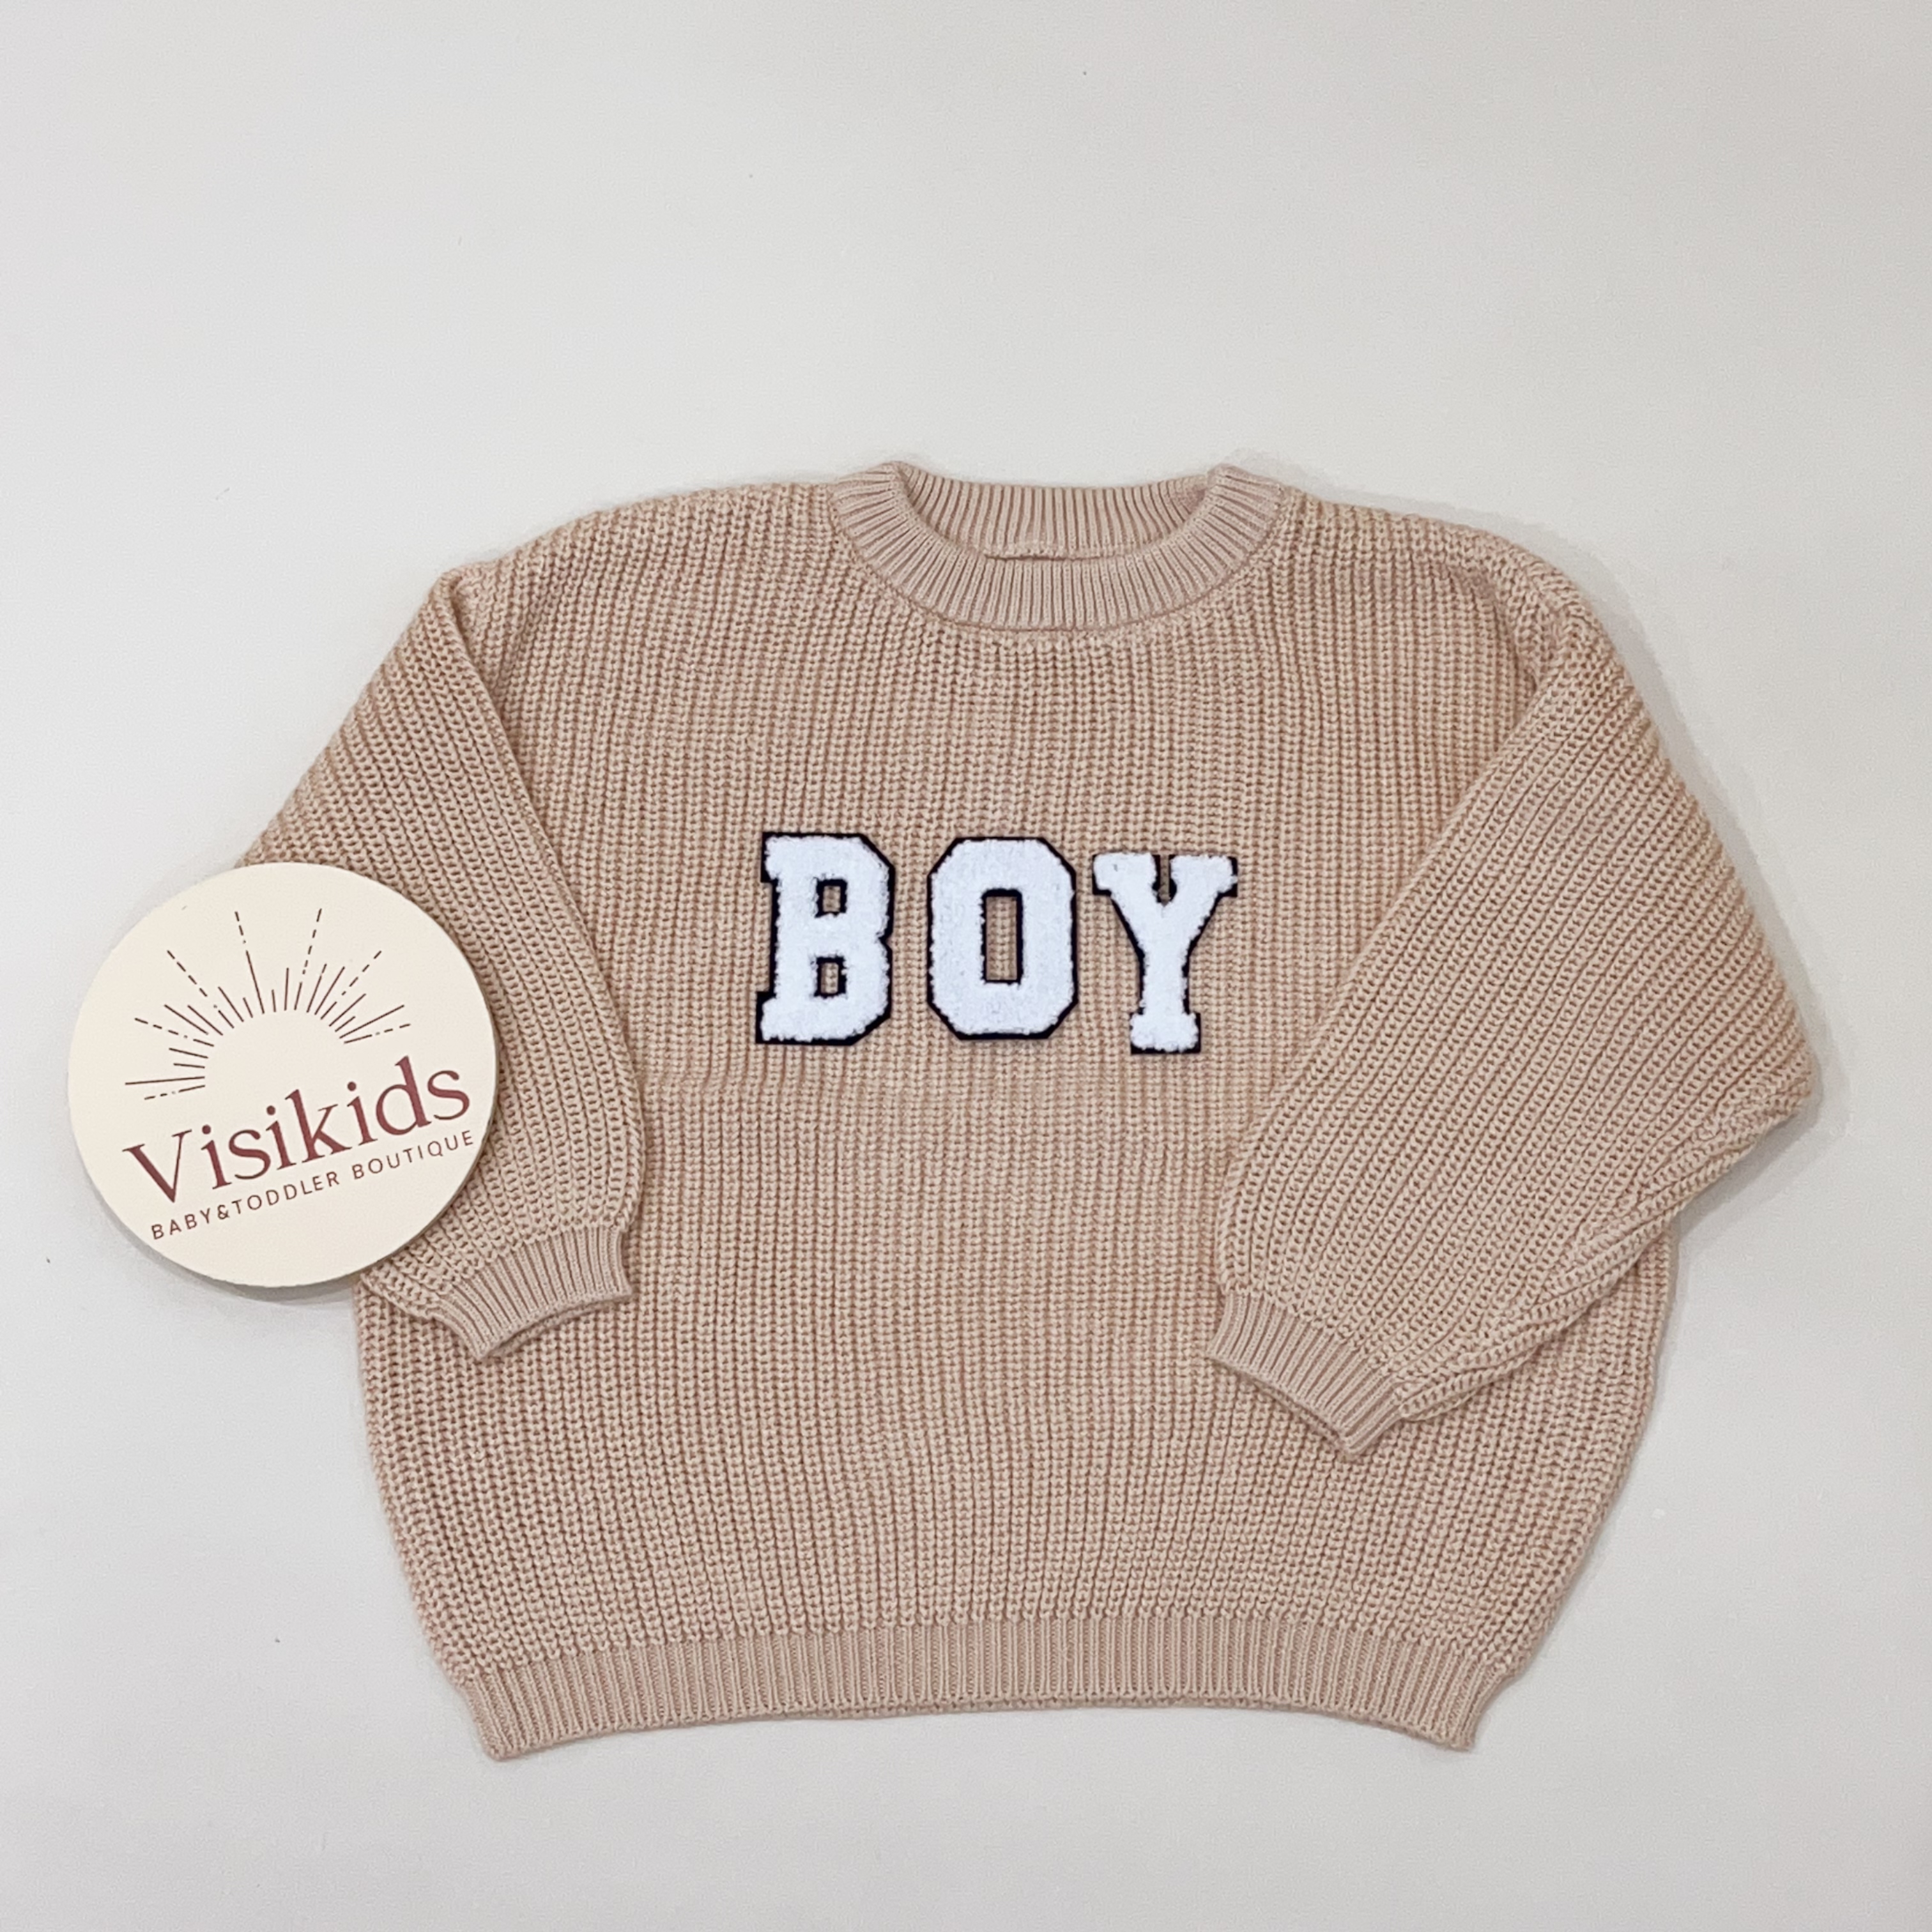 Baby Boy Sweater